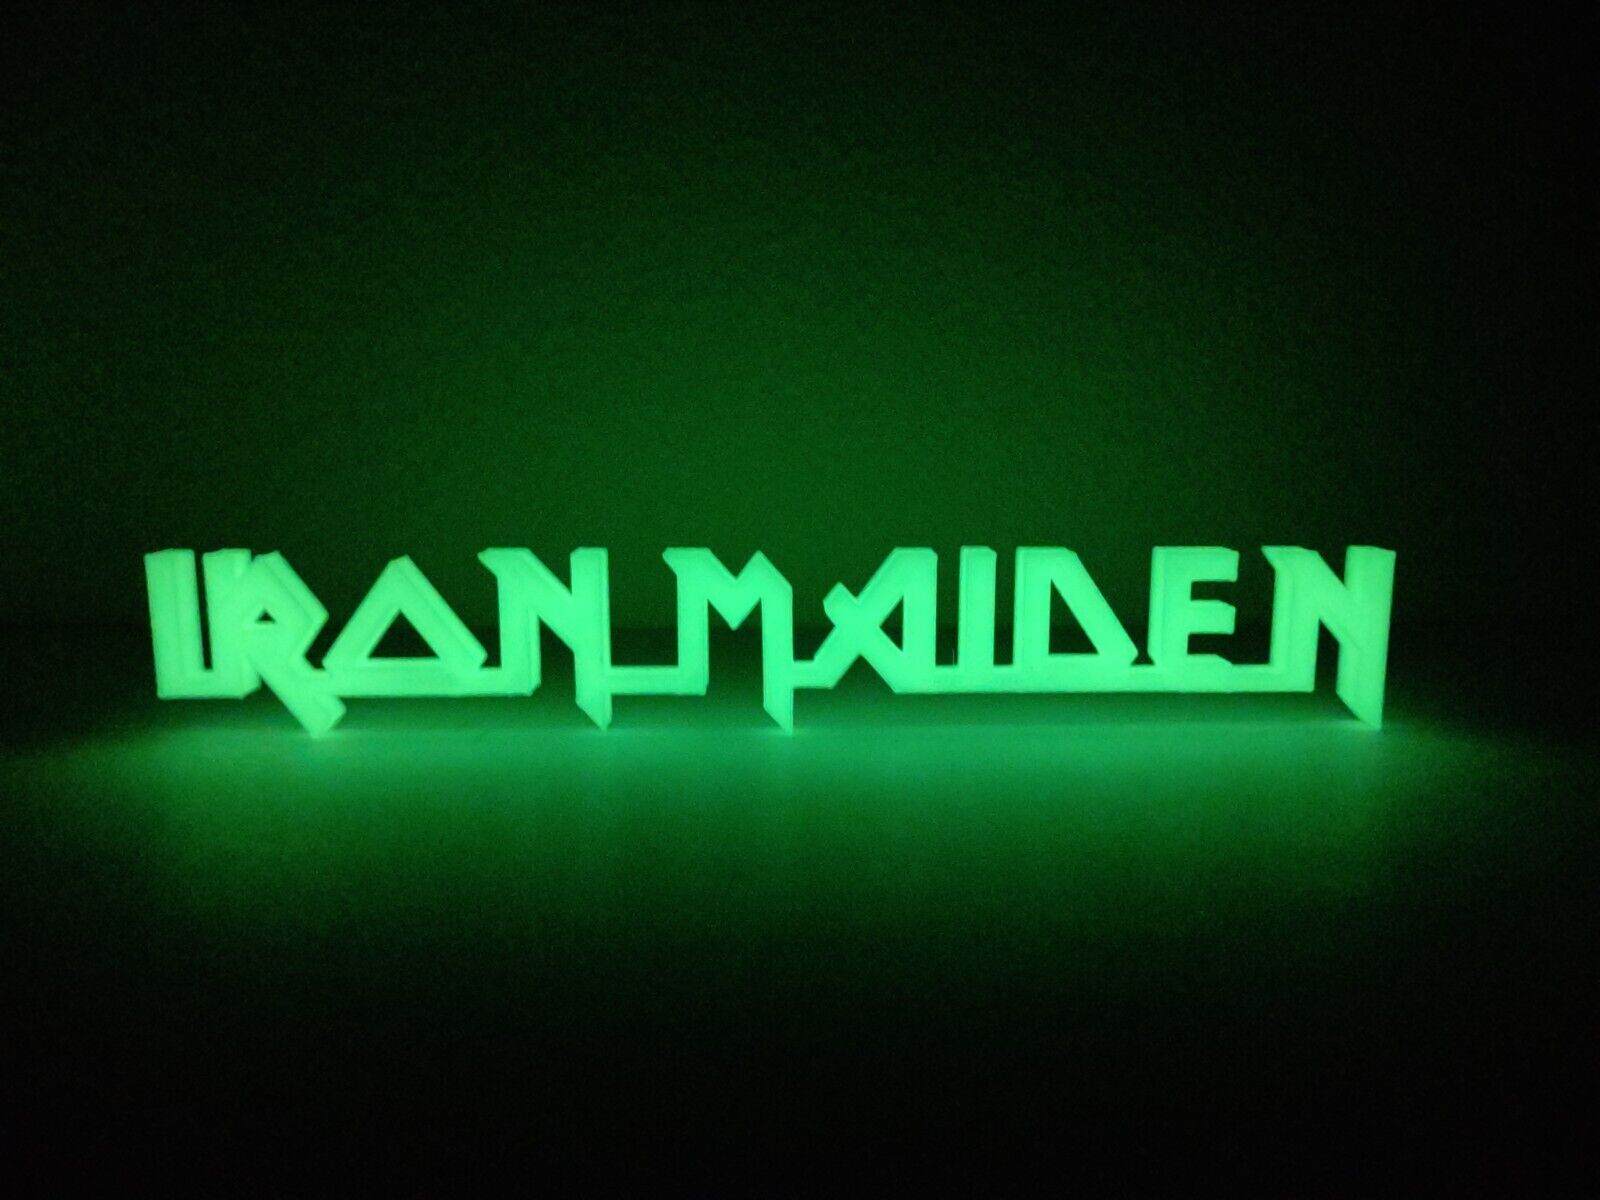 Iron Maiden GITD Display Sign Glow in the Dark